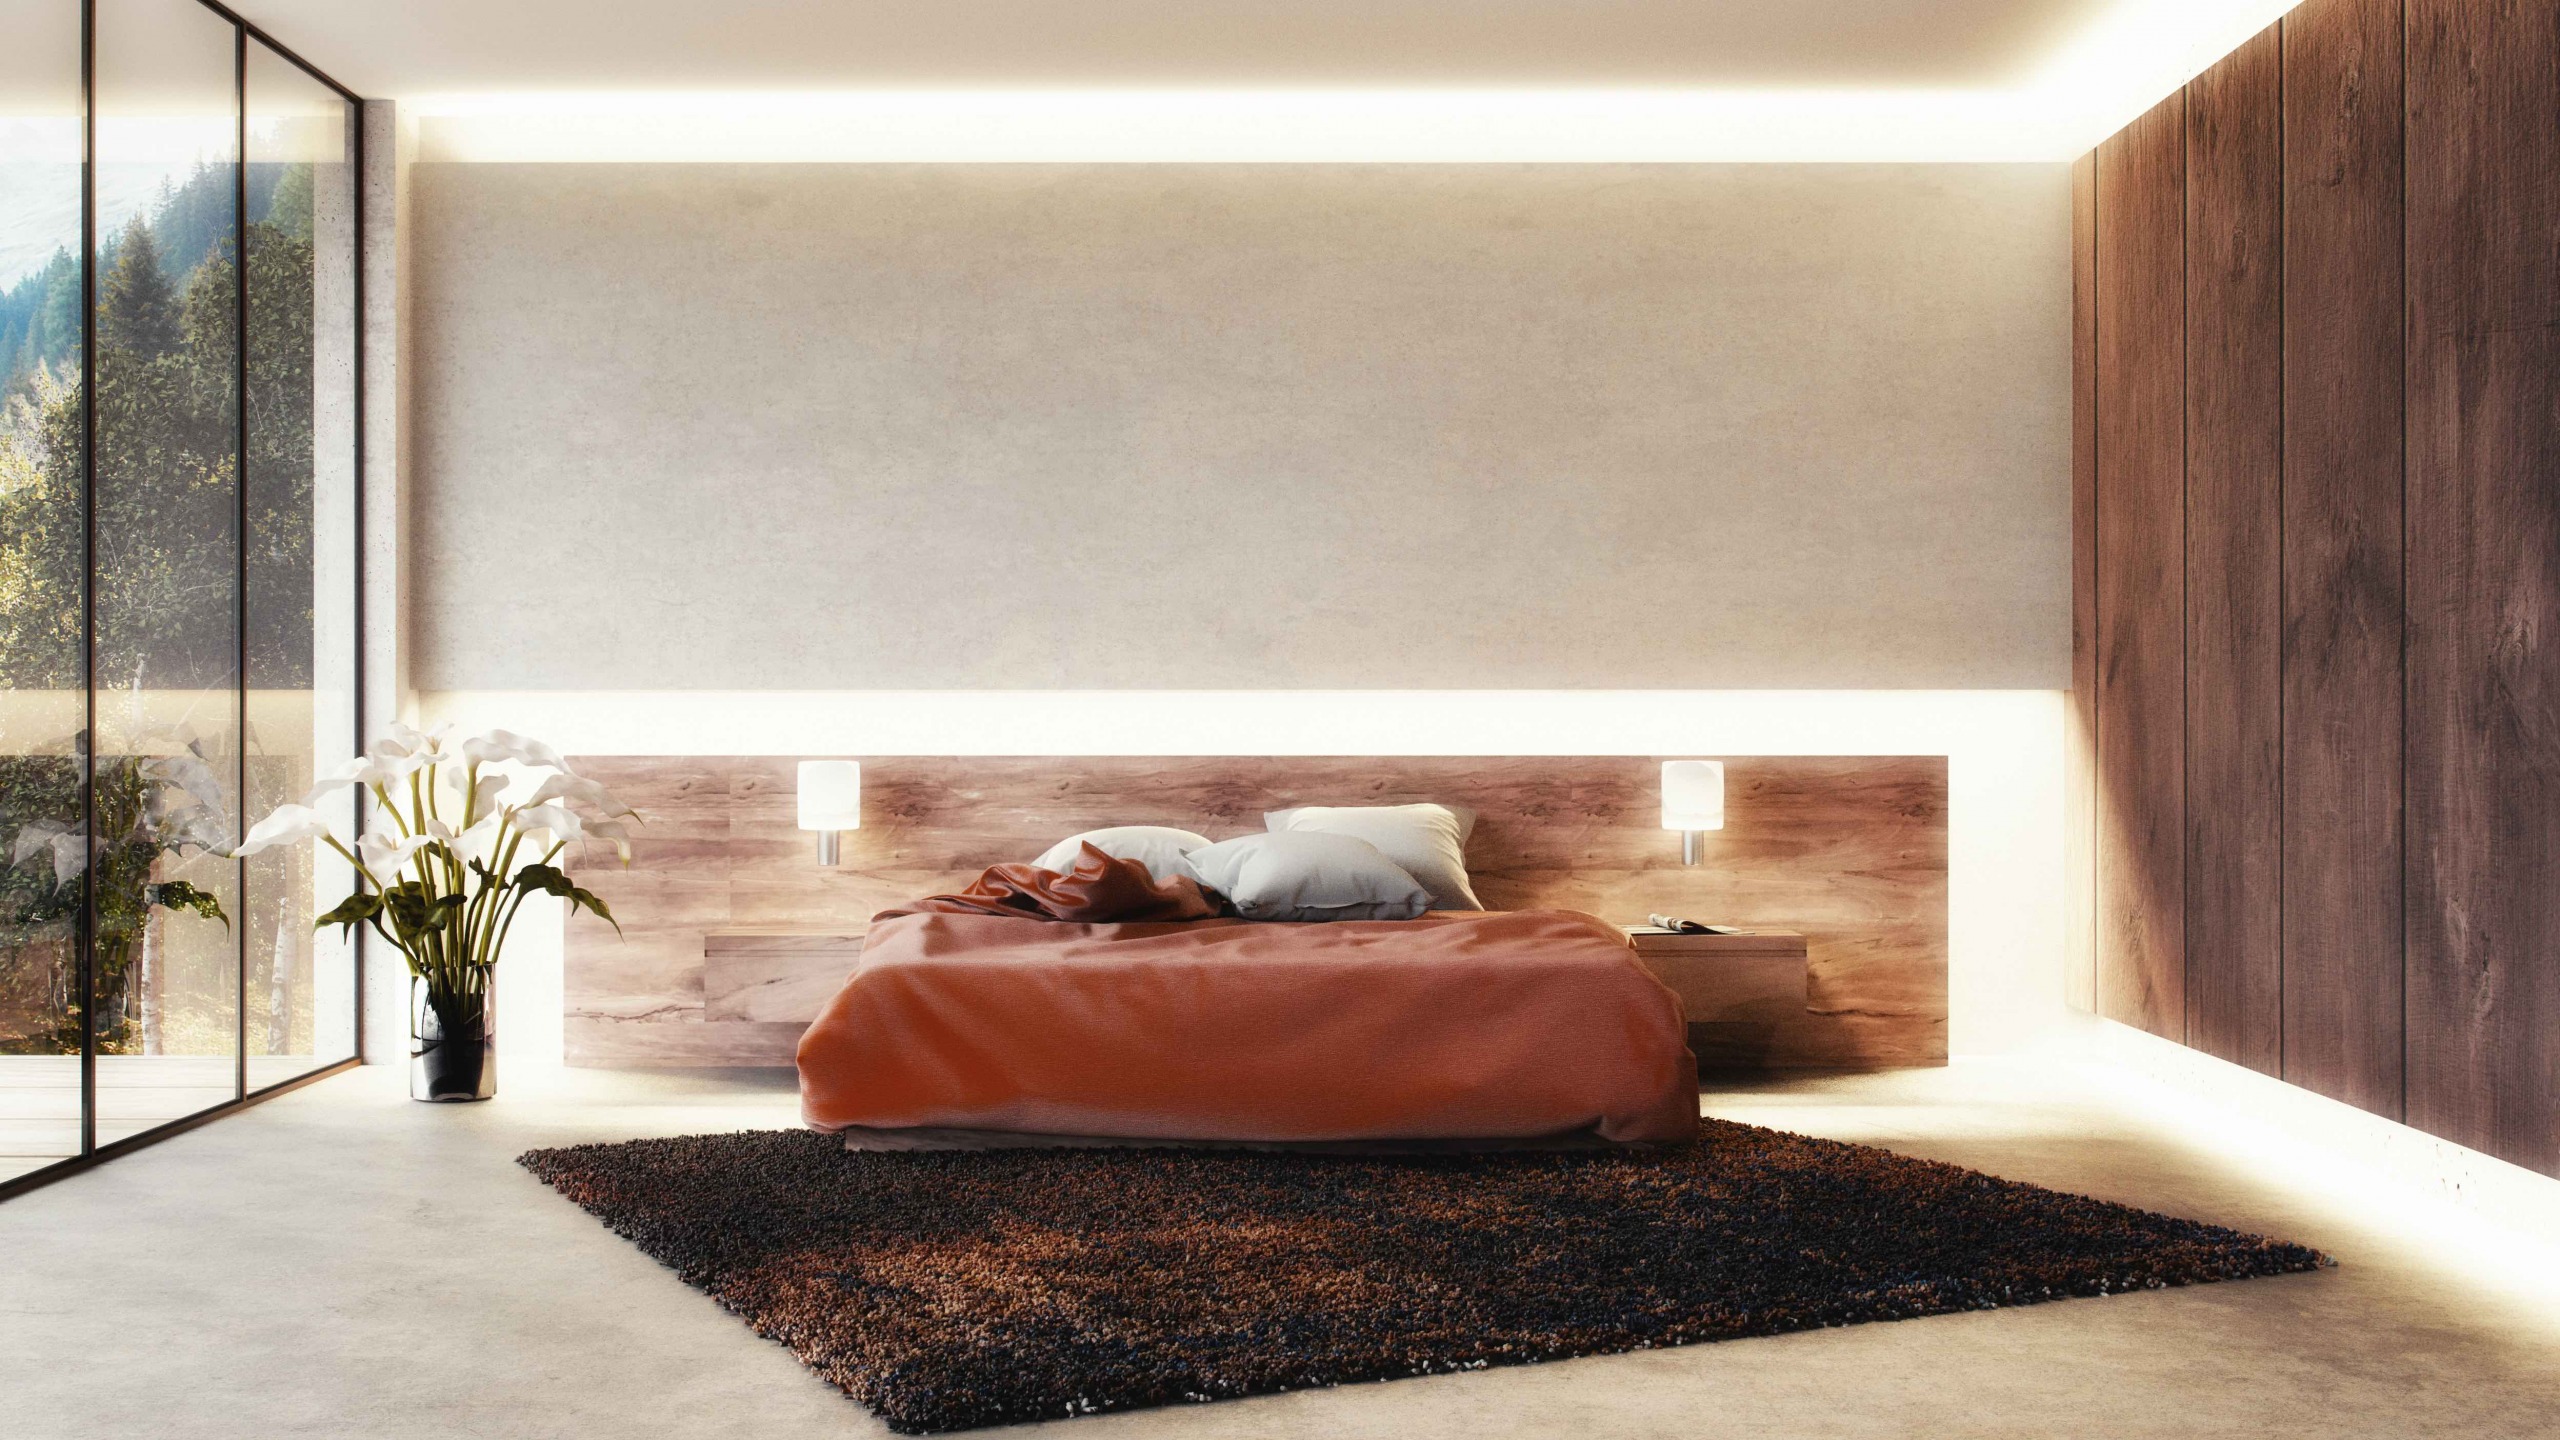 Design LED Decken Lampe Schlaf Zimmer Flur Spot Leiste Küchen Beleuchtung Diele 